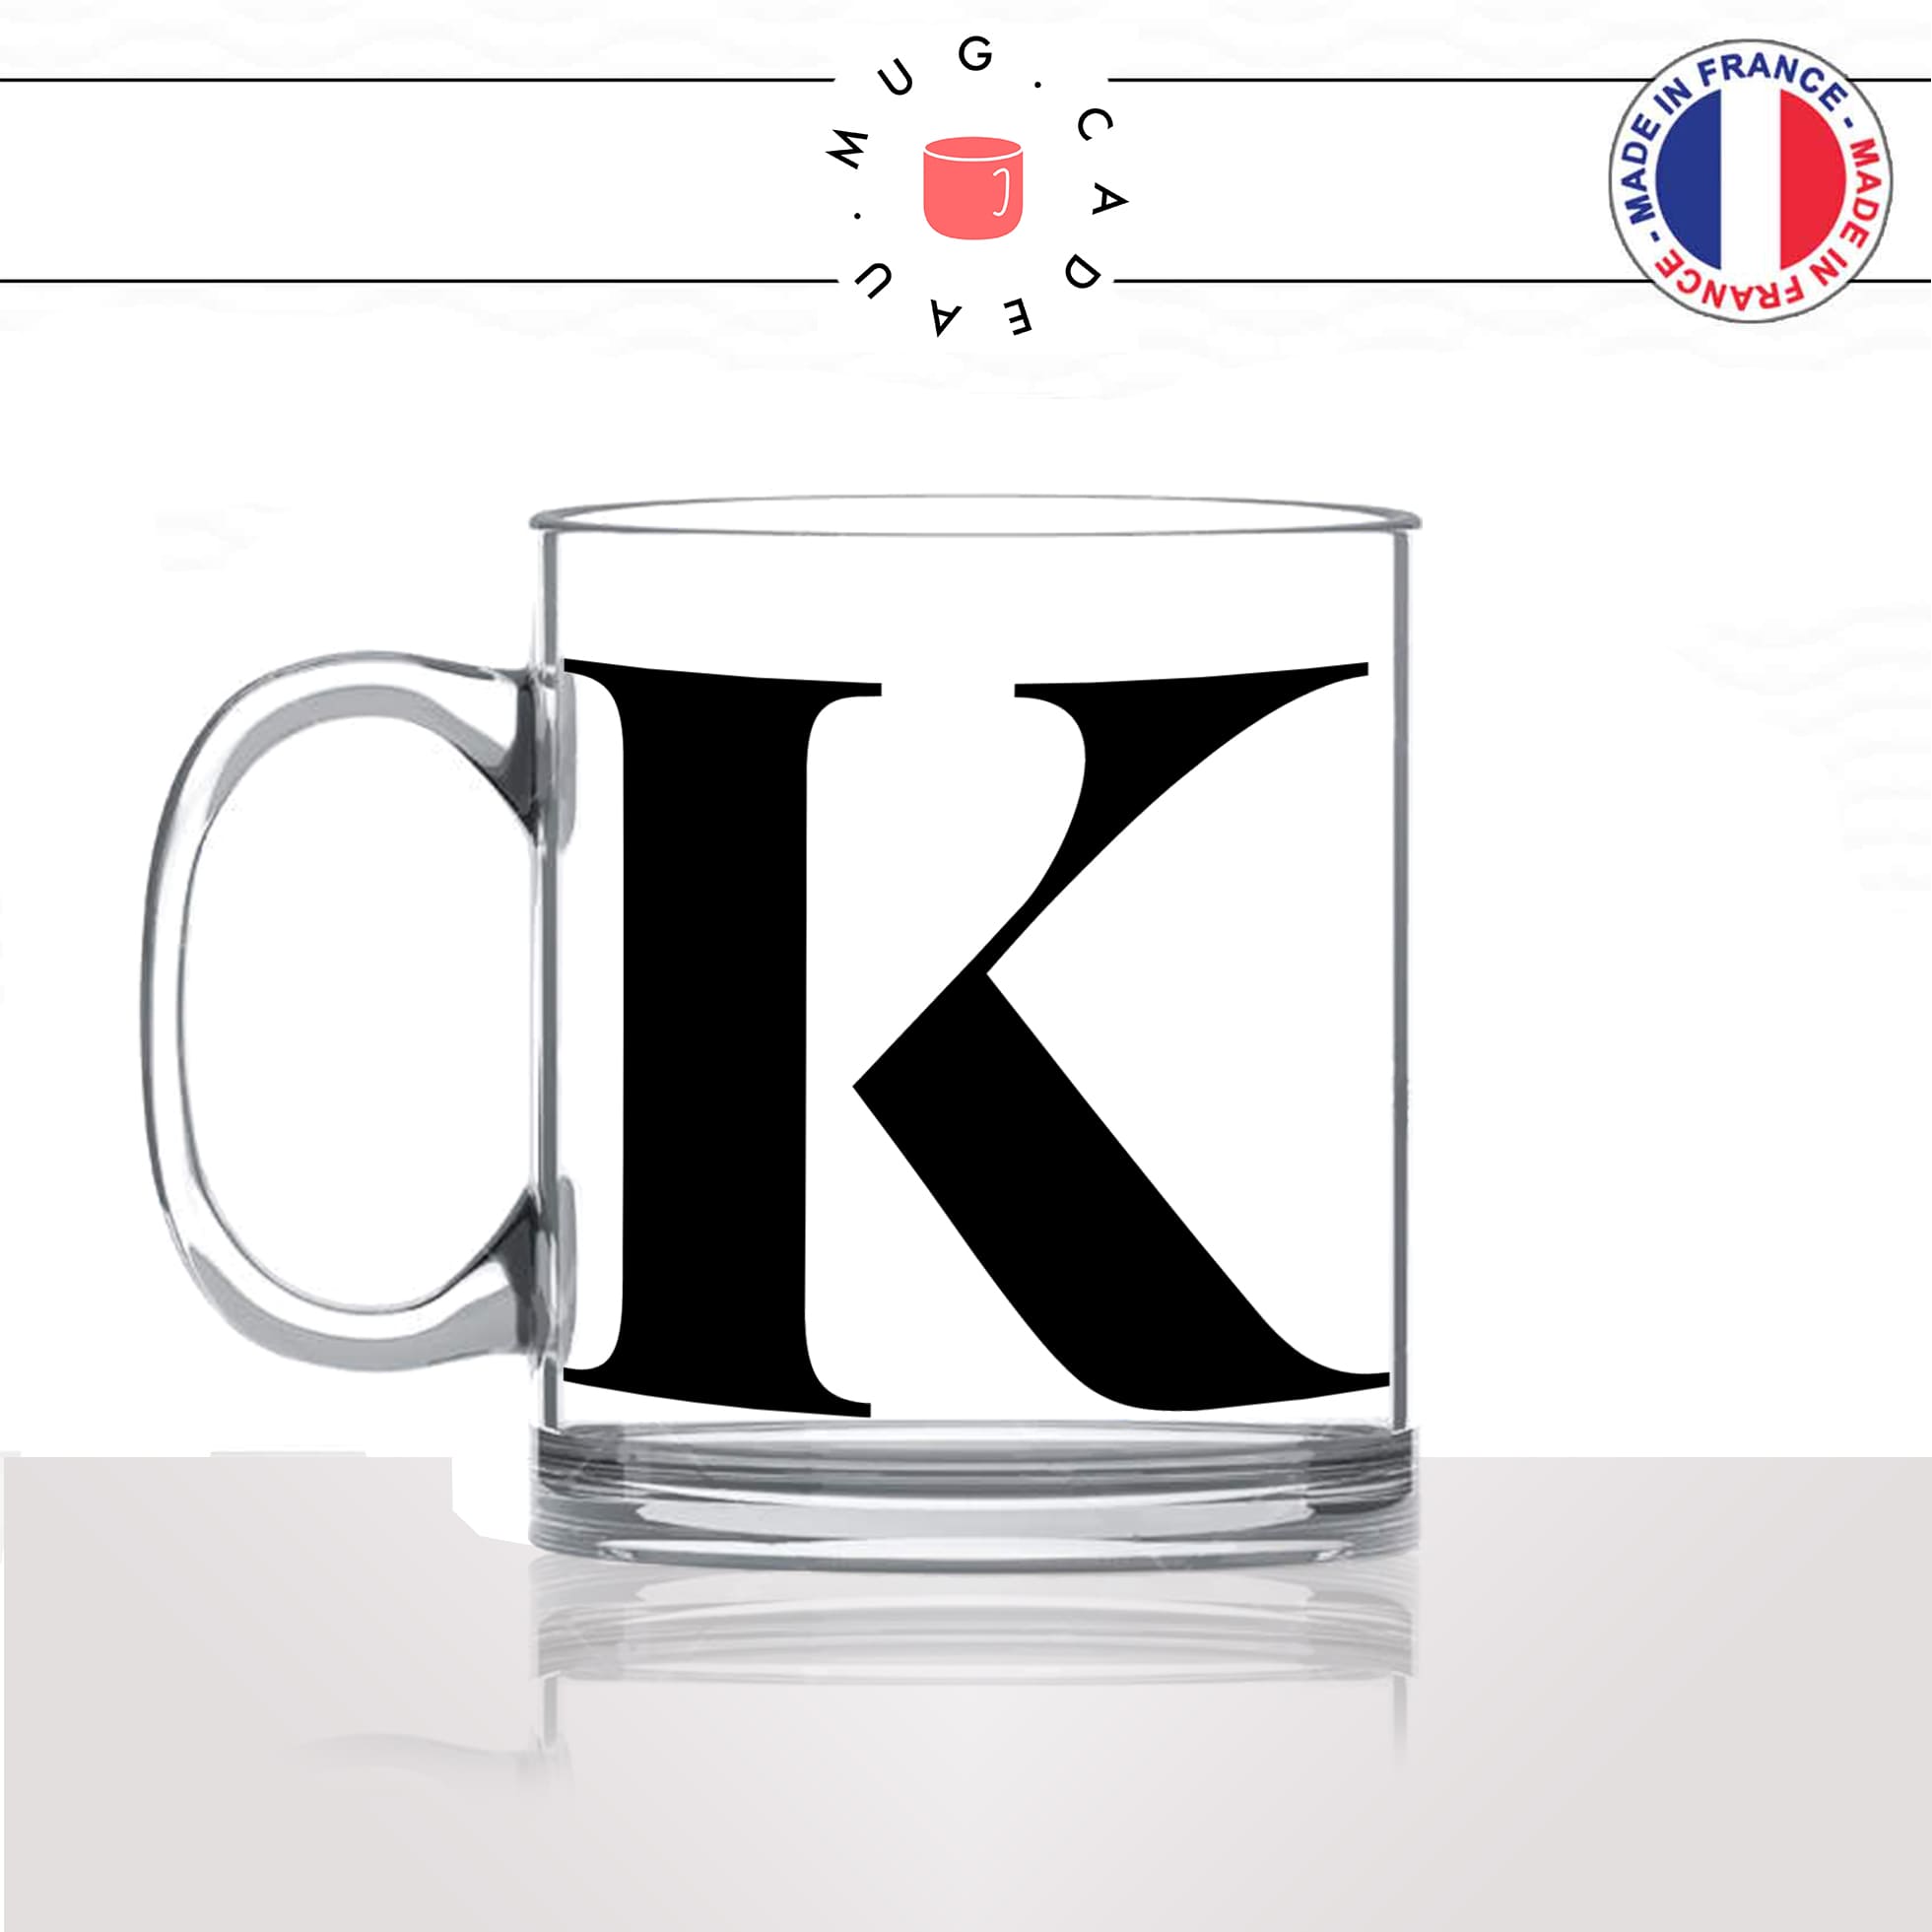 mug-tasse-en-verre-transparent-glass-initiale-K-karol-karine-karina-majuscule-prenom-lettre-collegue-original-idée-cadeau-fun-cool-café-thé